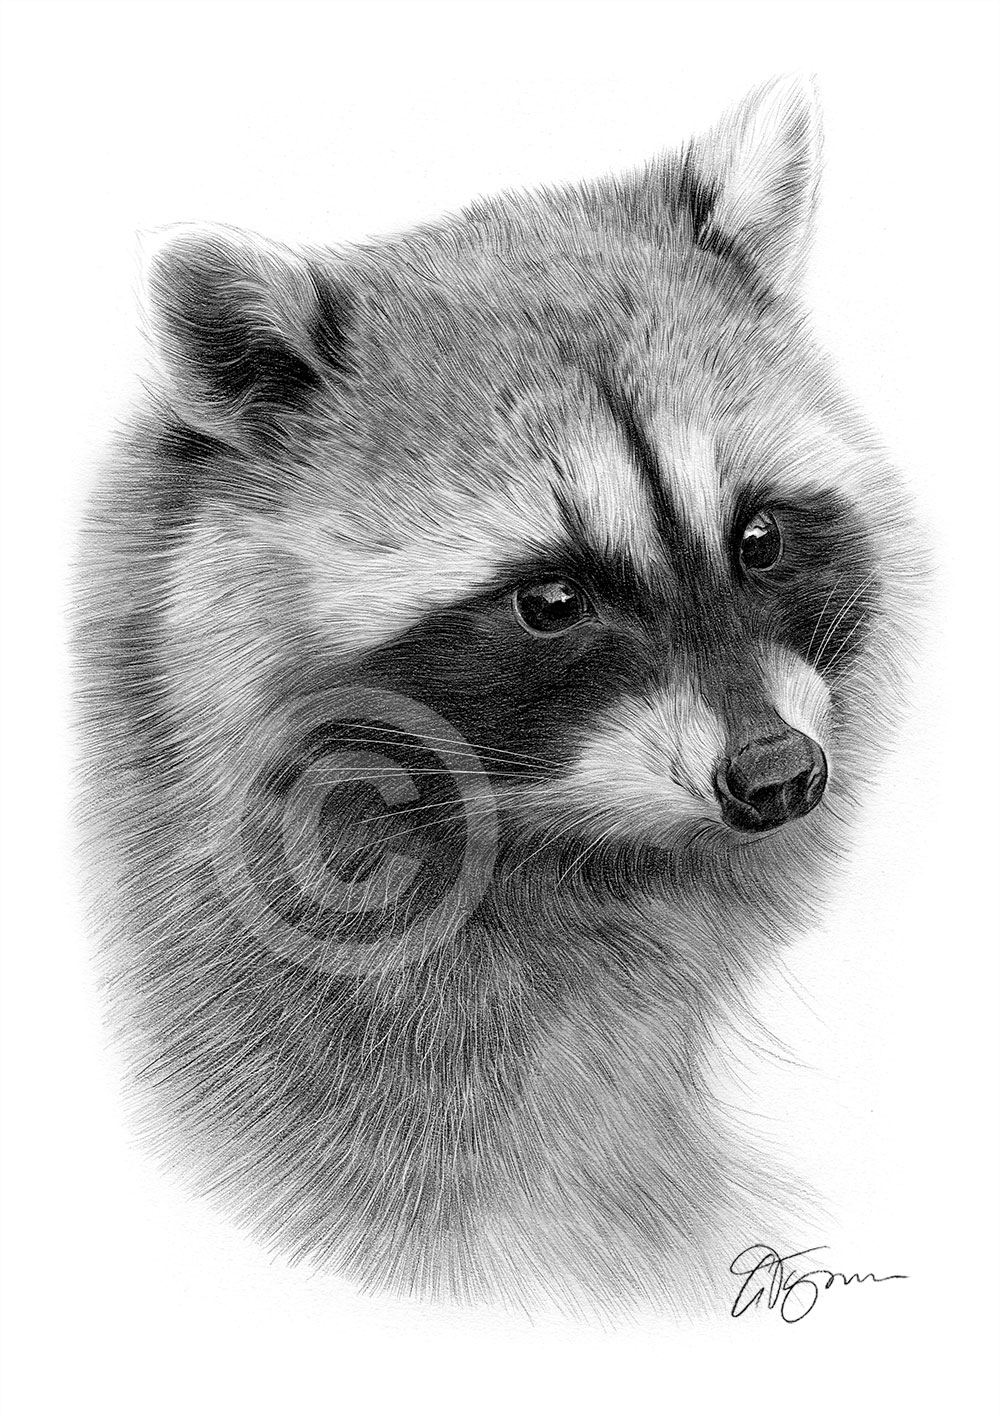 Pencil drawing of a raccoon by artist Gary Tymon